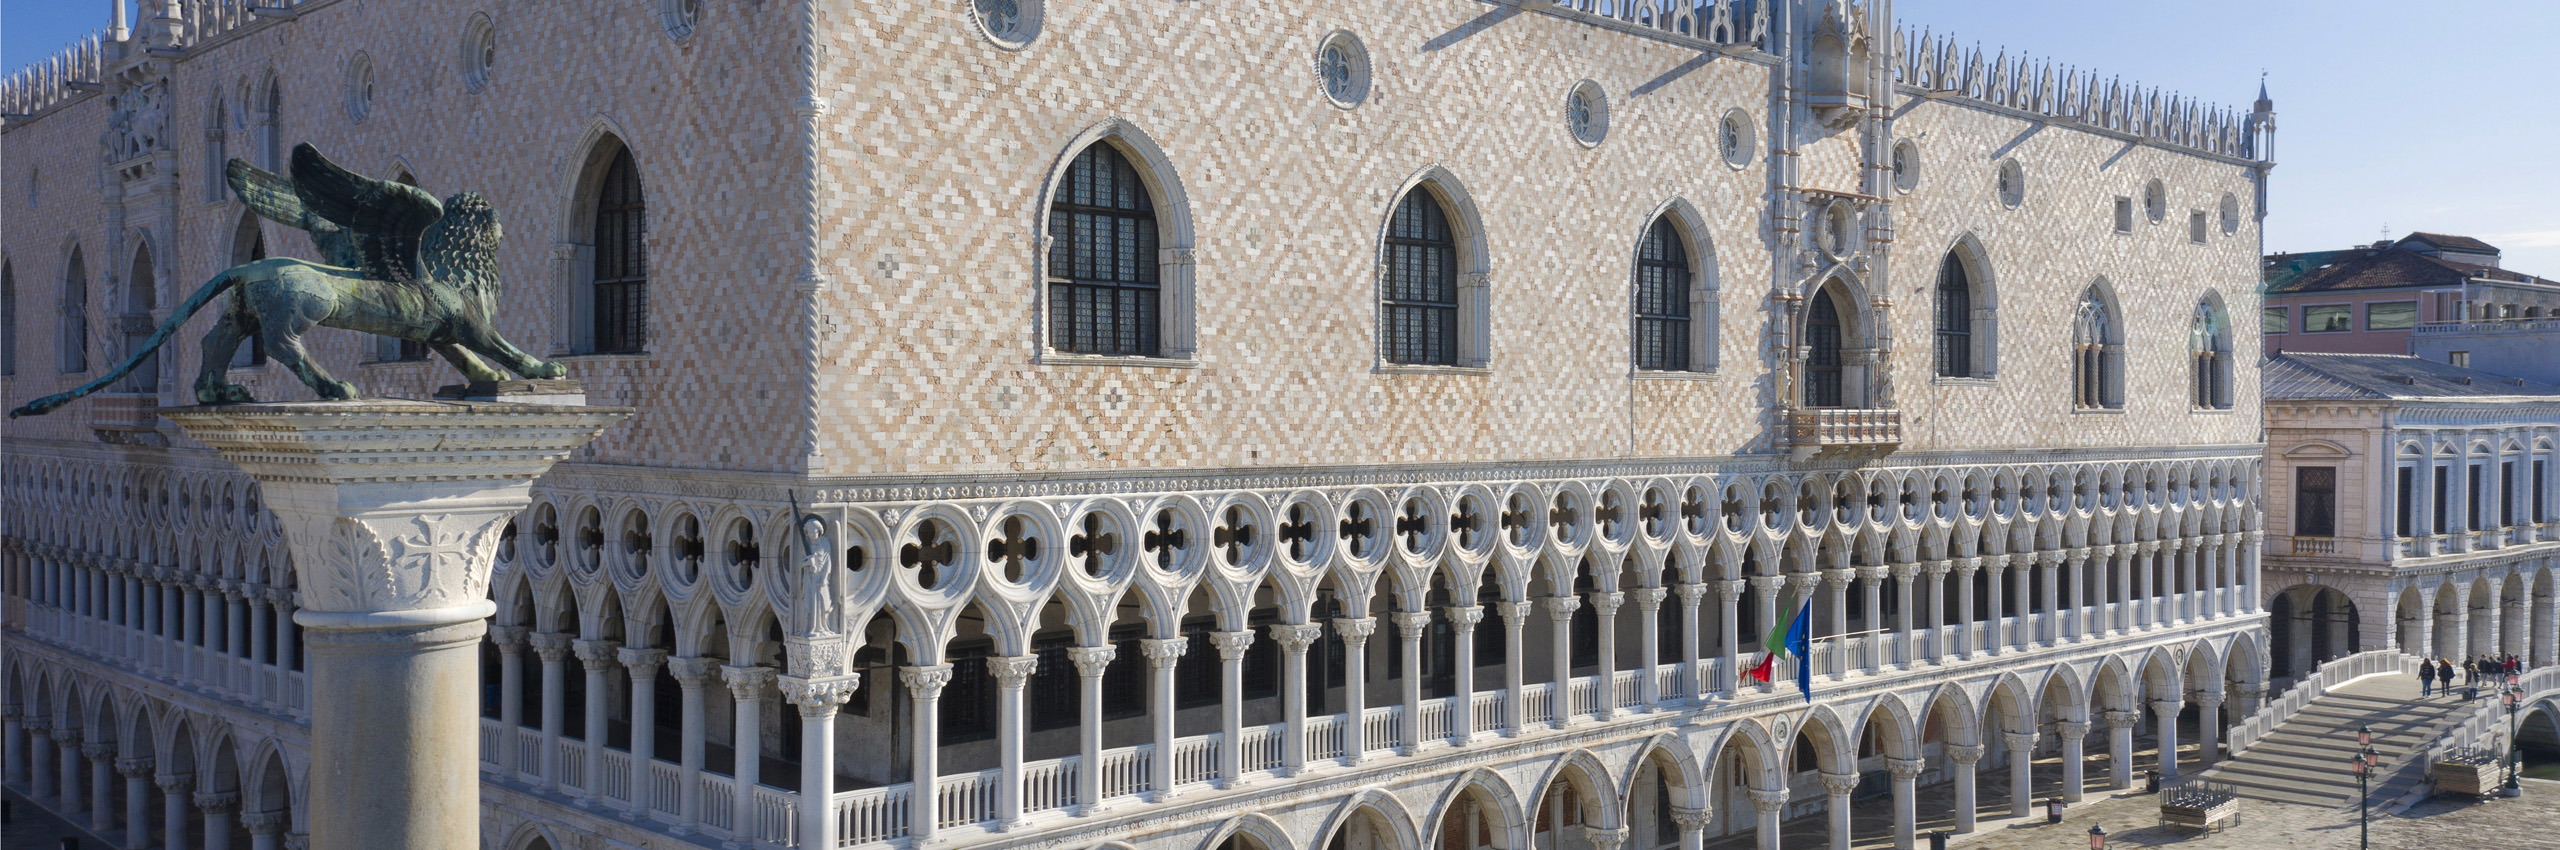 SIM-1150095 | Italy/Veneto, Venezia district, Venice, St Mark's Square, Doge's Palace | © Massimo Ripani/SIME